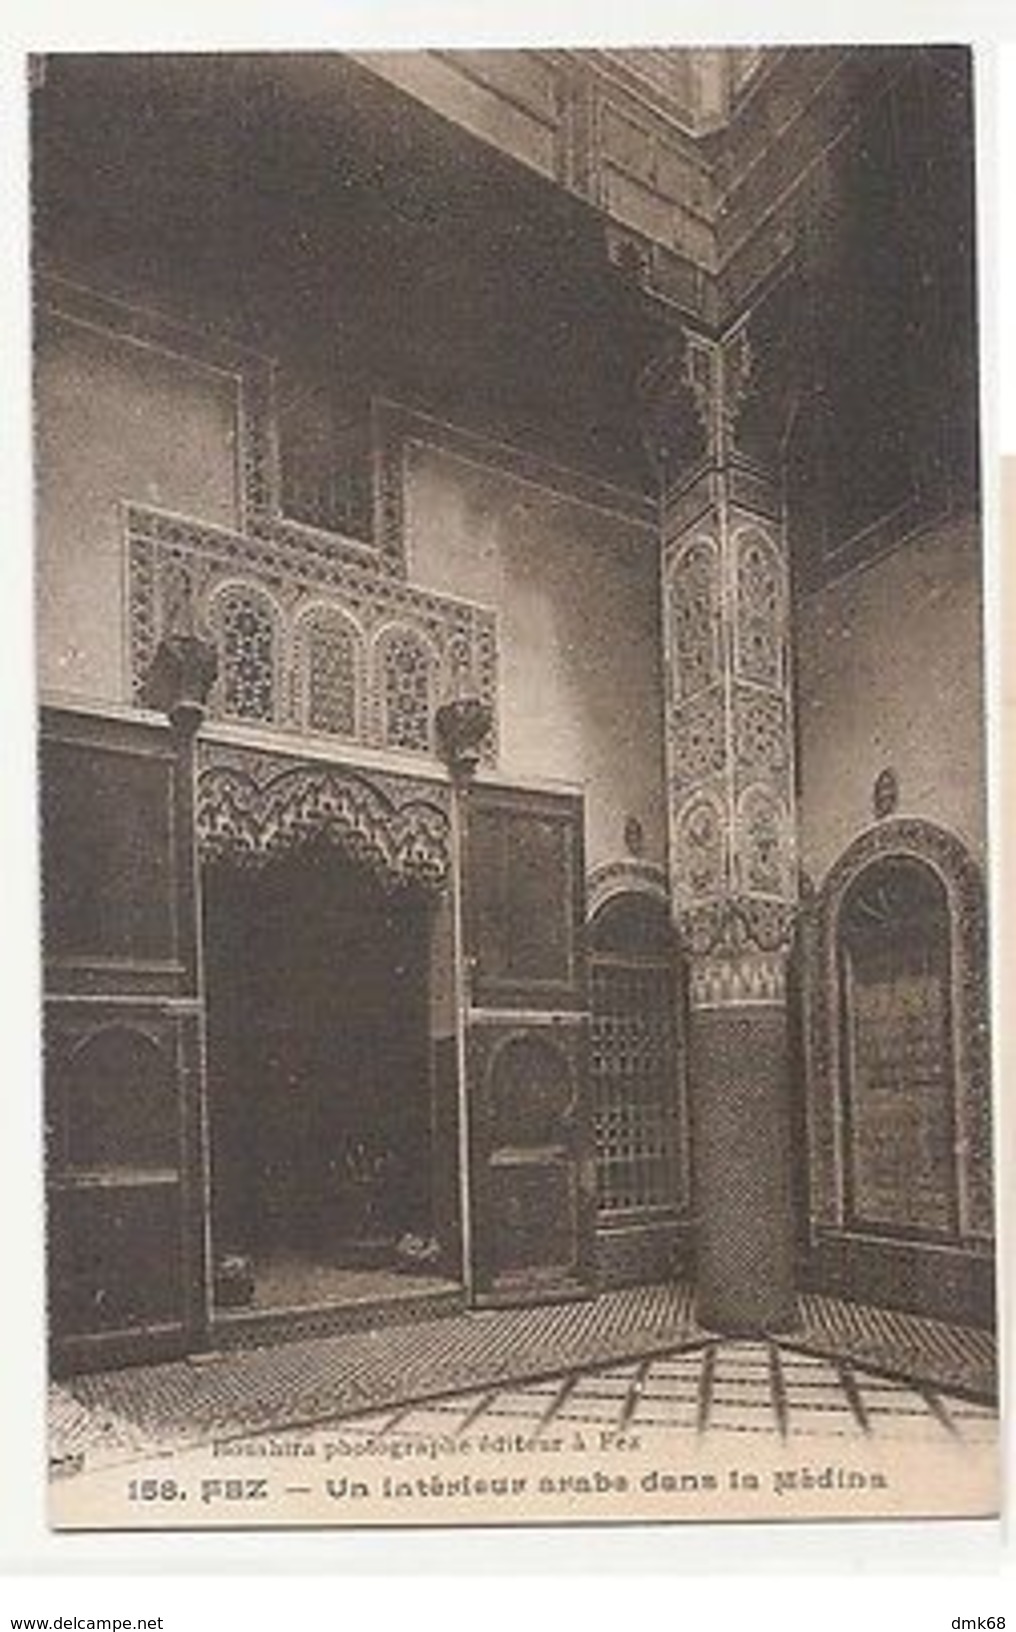 MOROCCO - FEZ - INTERIEUR ARABE DANS LA MEDINA - PHOTO BOUSHIRA 1910s  ( 1921 ) - Non Classés